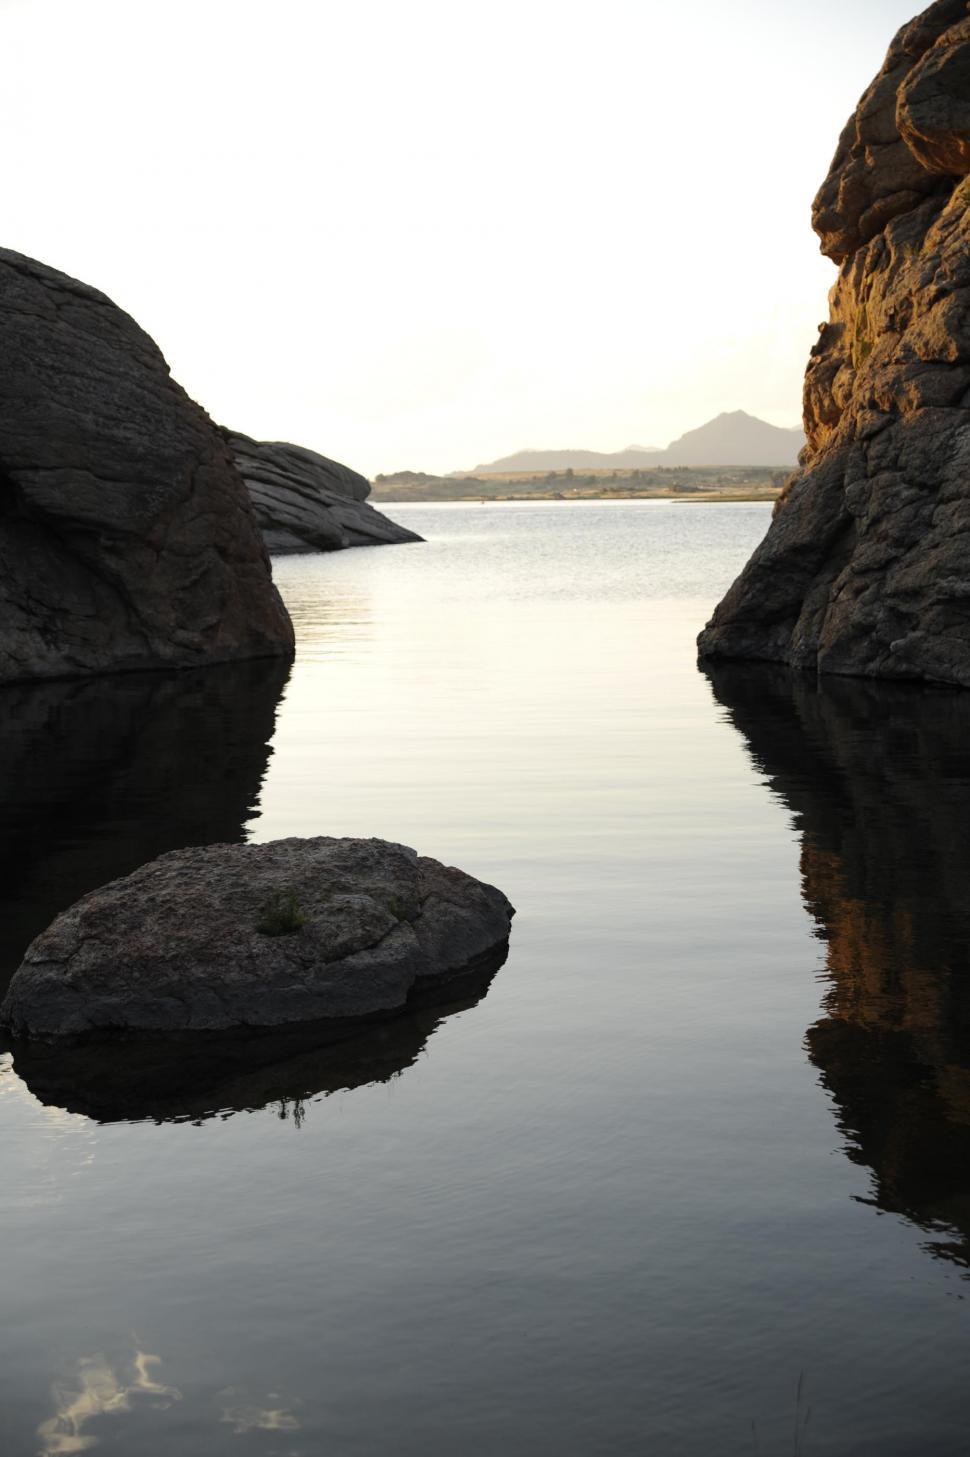 Free Image of Lake and Rock 